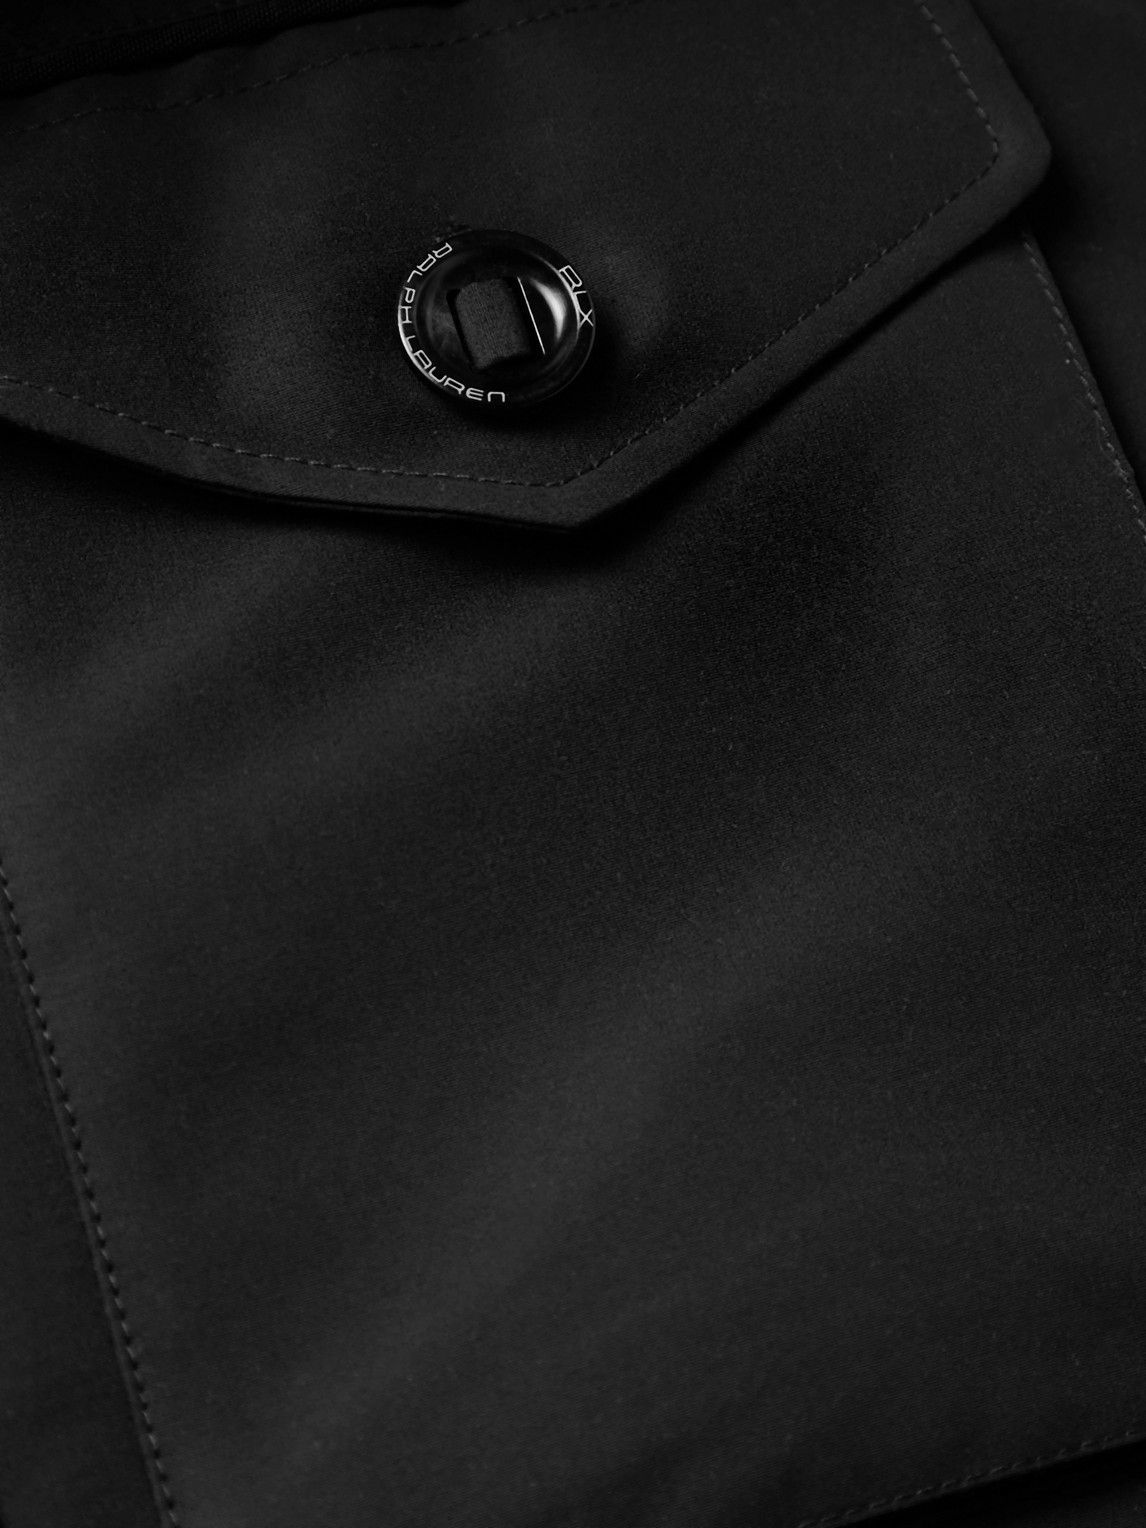 Polo Ralph Lauren - Alistair Faux Fur-Trimmed Shell Hooded Down Parka - Black